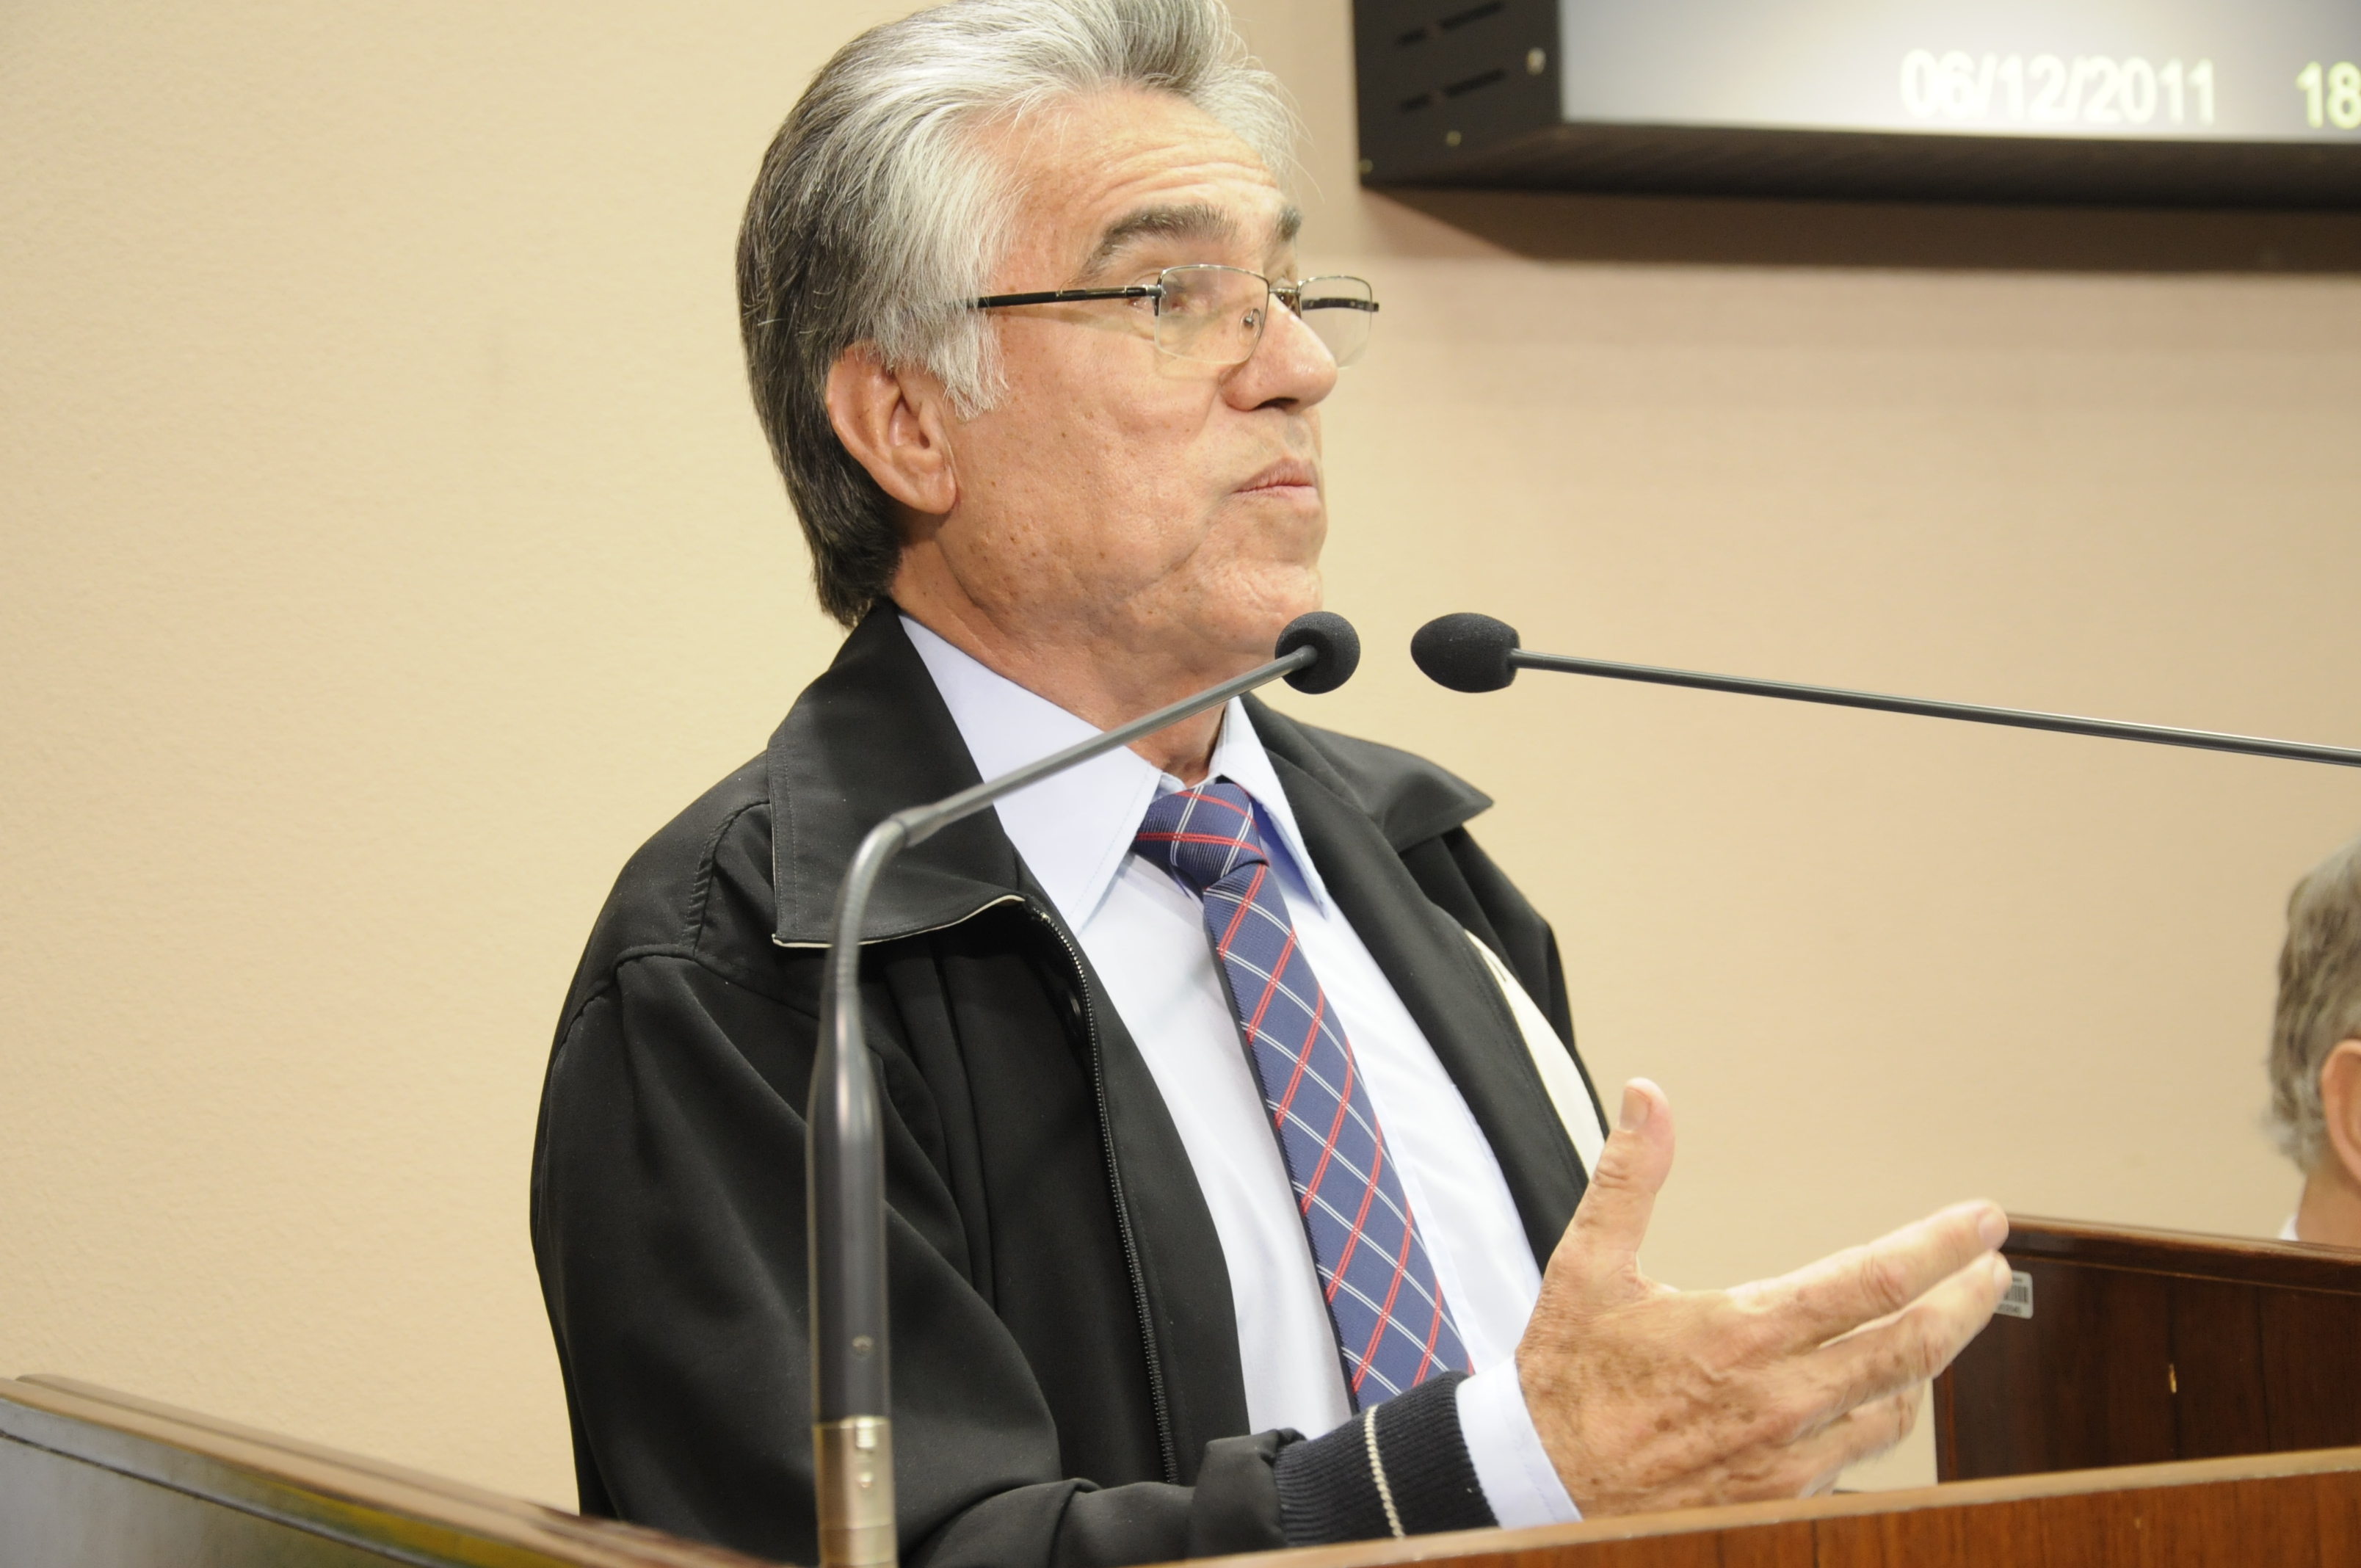 Francisco Spiandorello retorna ao Legislativo